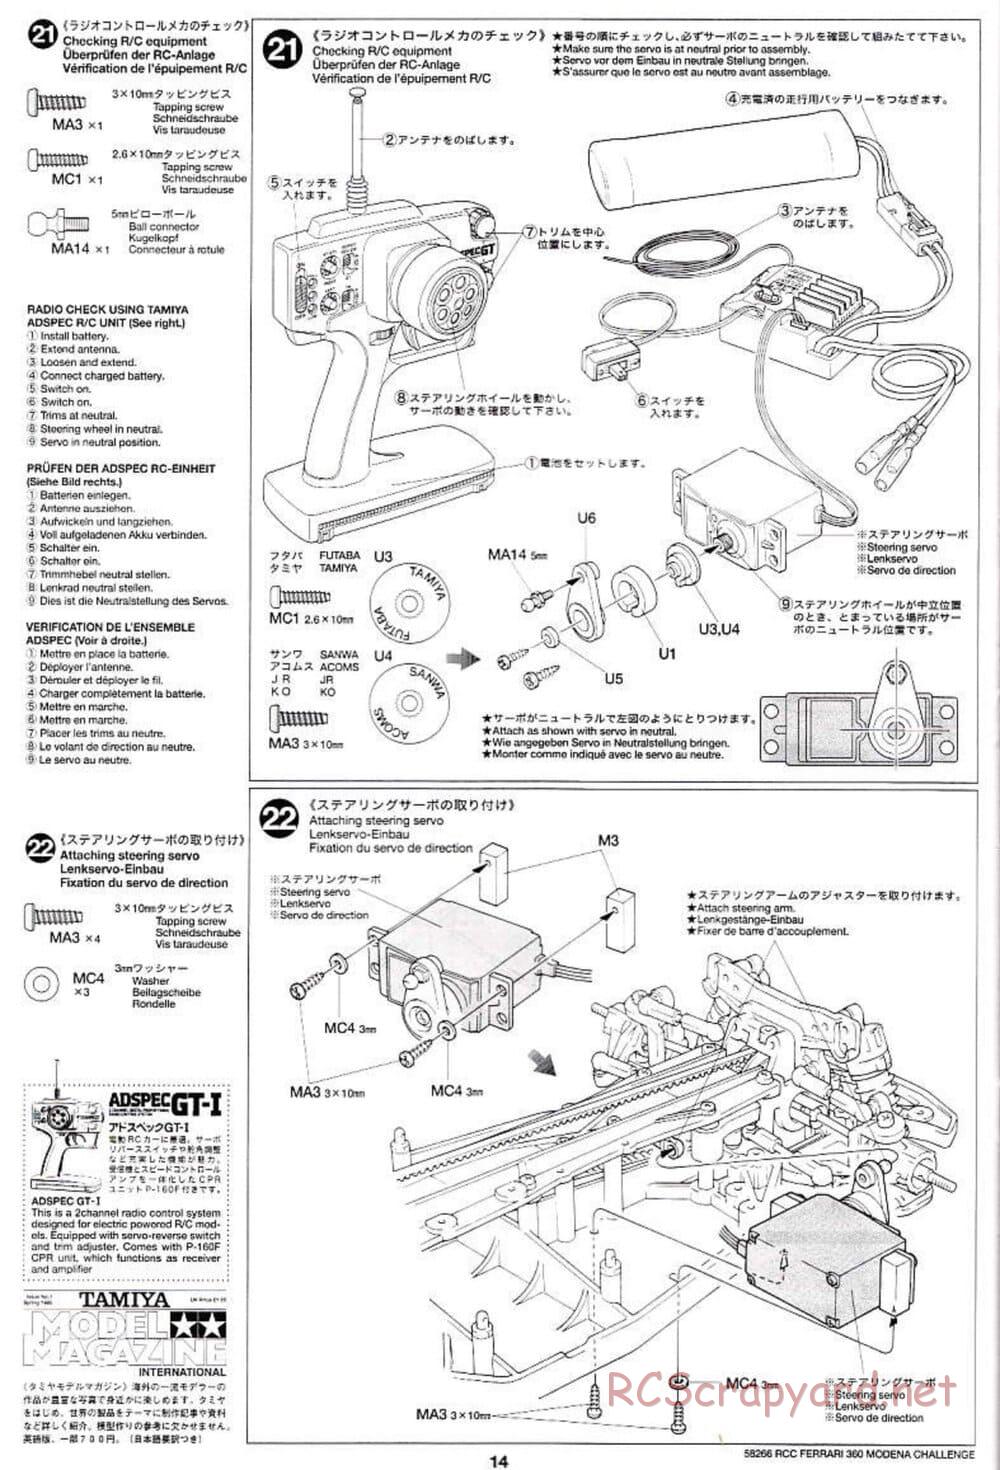 Tamiya - Ferrari 360 Modena Challenge - TA-04 Chassis - Manual - Page 14